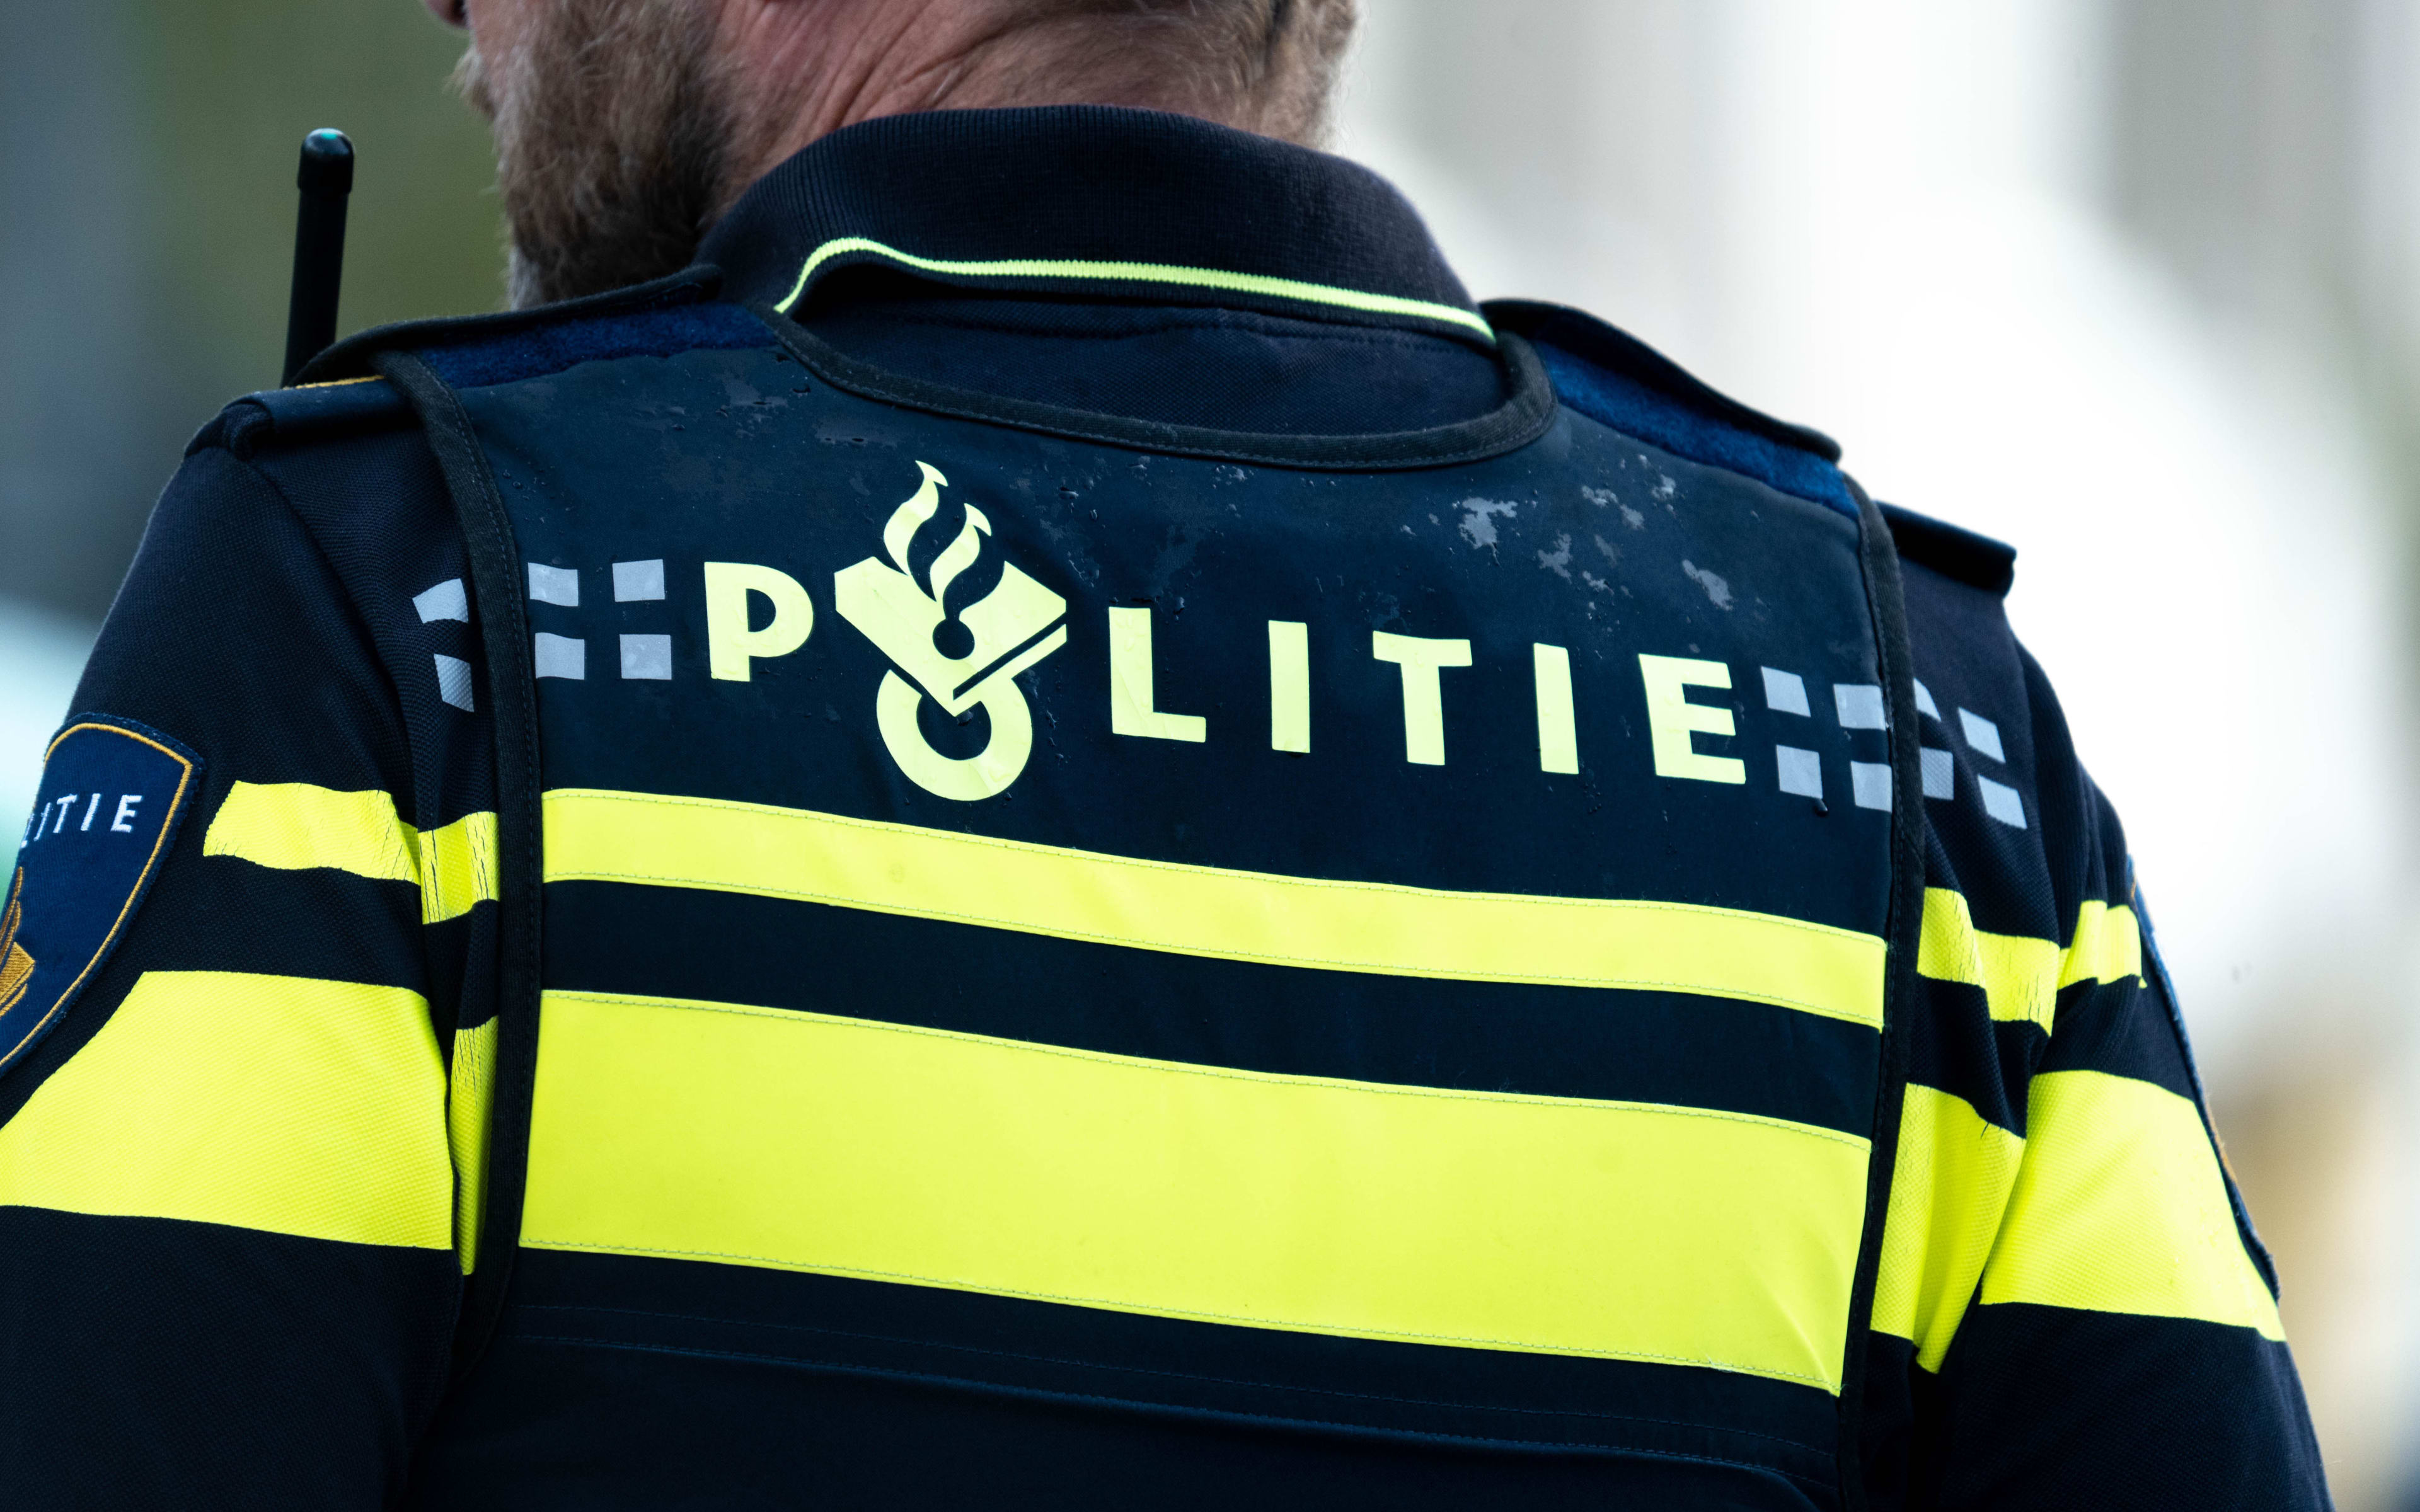 Twee gewonden na steekincident bij zorginstelling Rotterdam